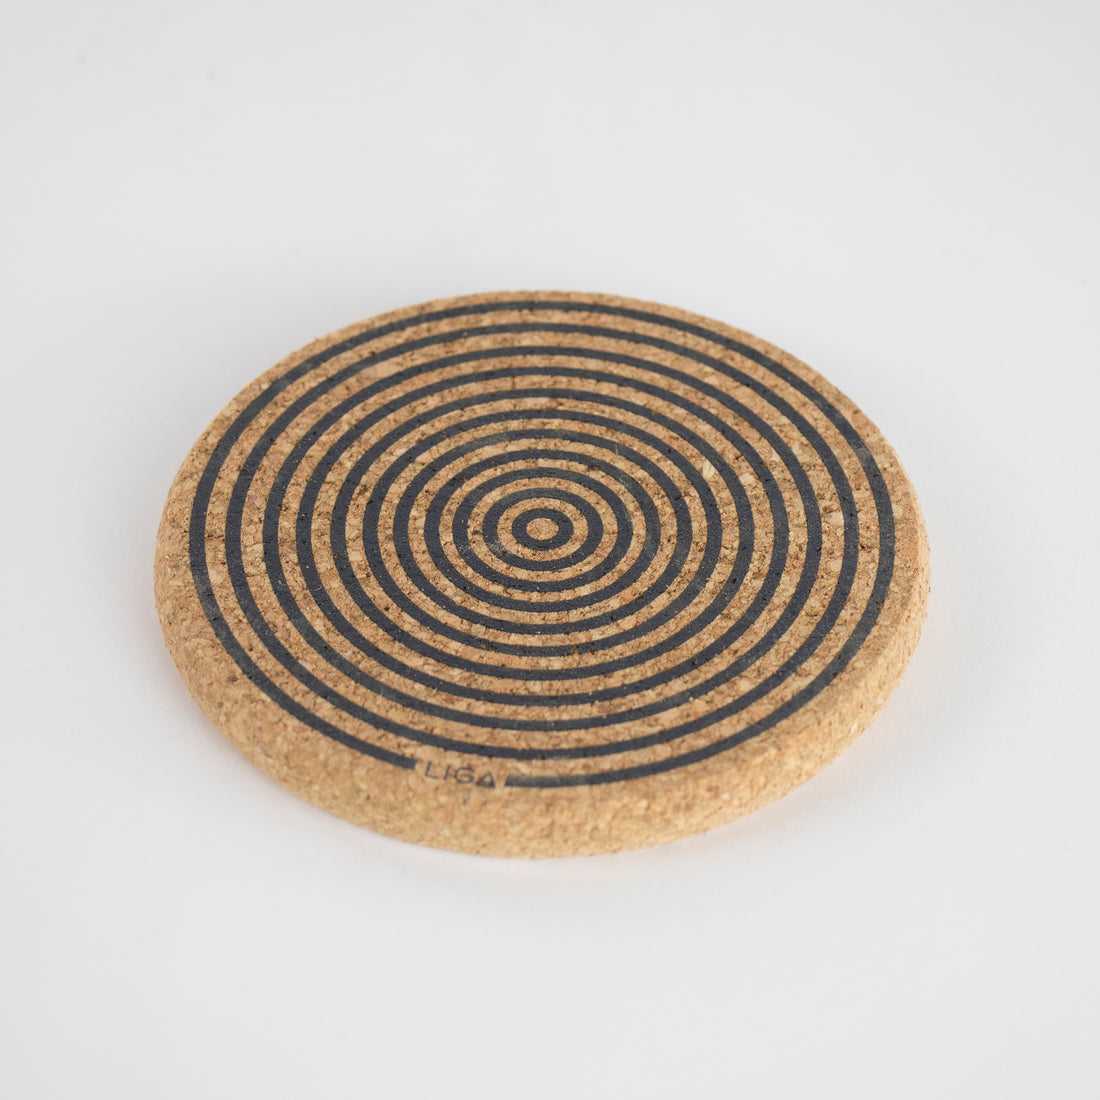 Eco friendly cork placemats + coasters. Orbit design